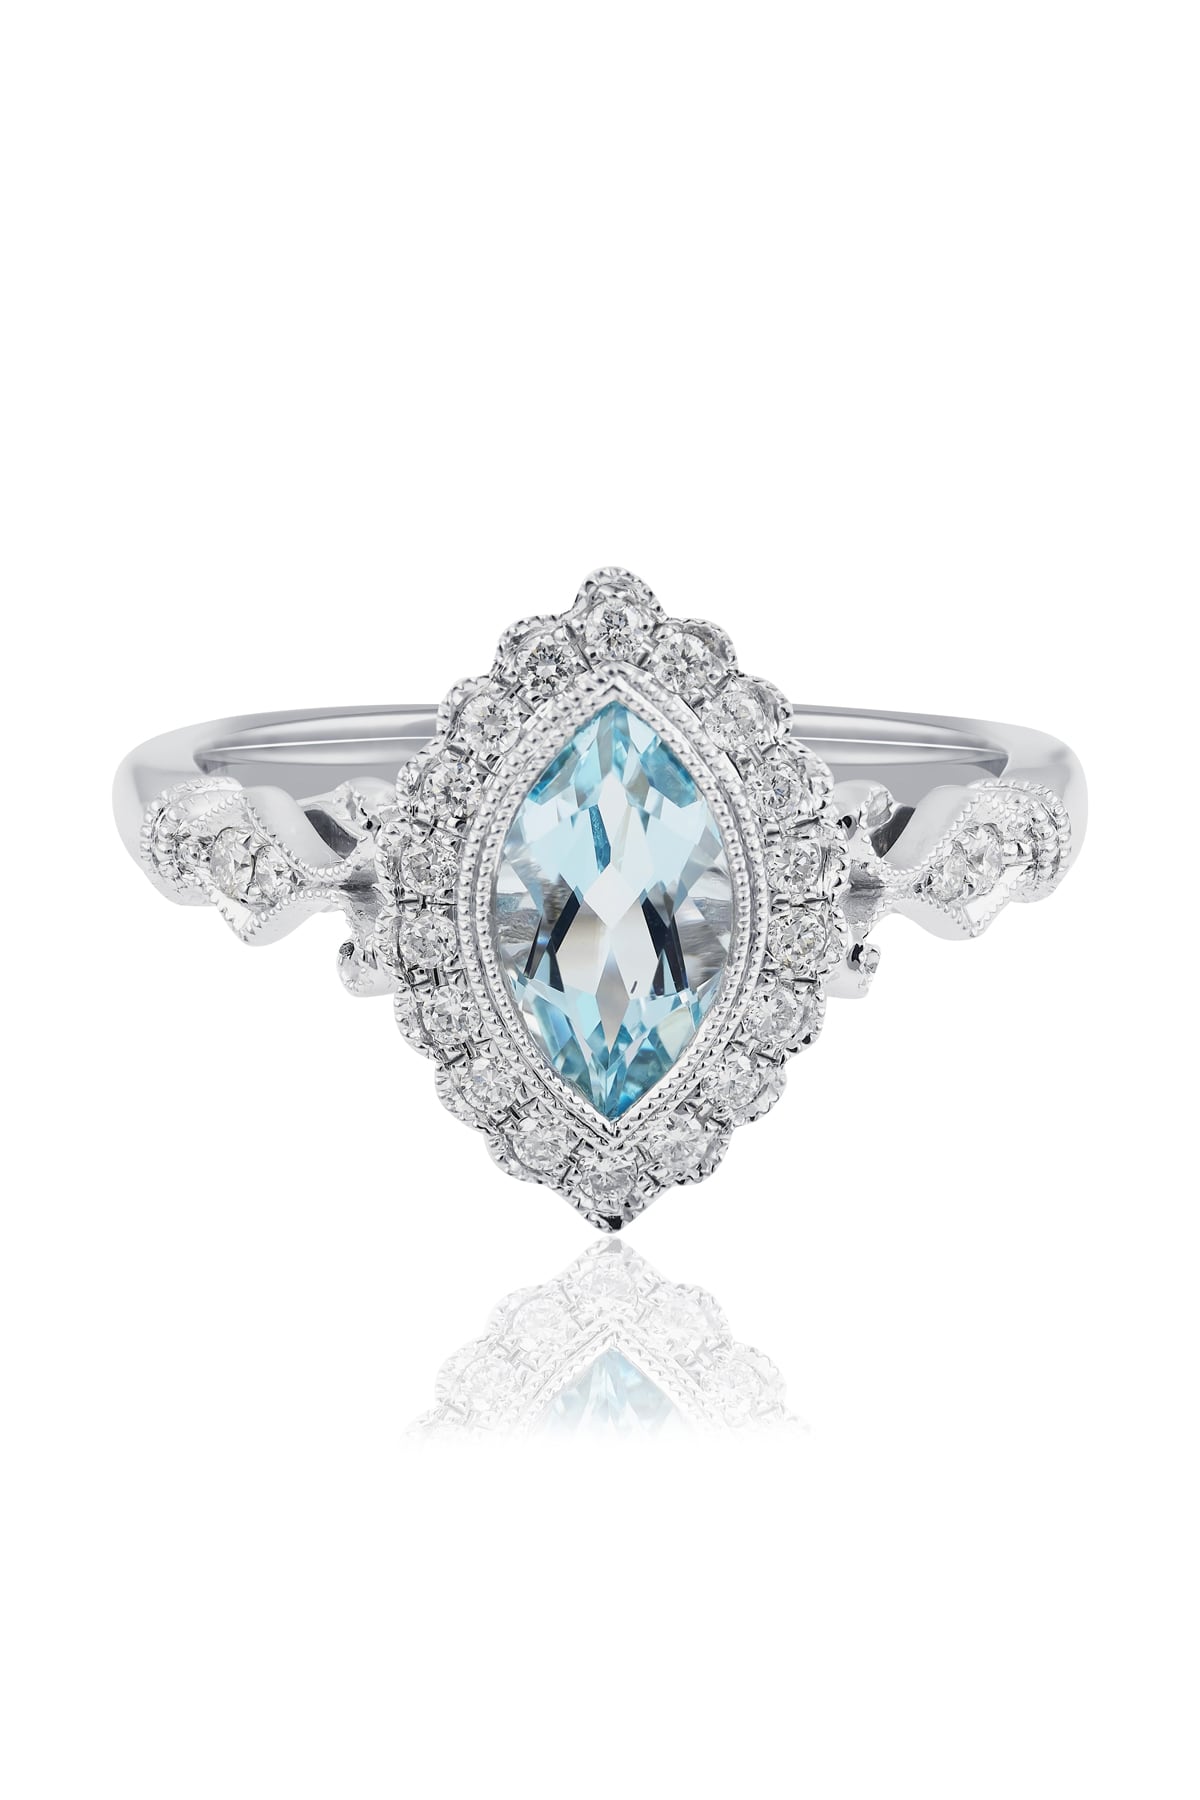 Antique Look Aquamarine & Diamond Ring from LeGassick Jewellery.